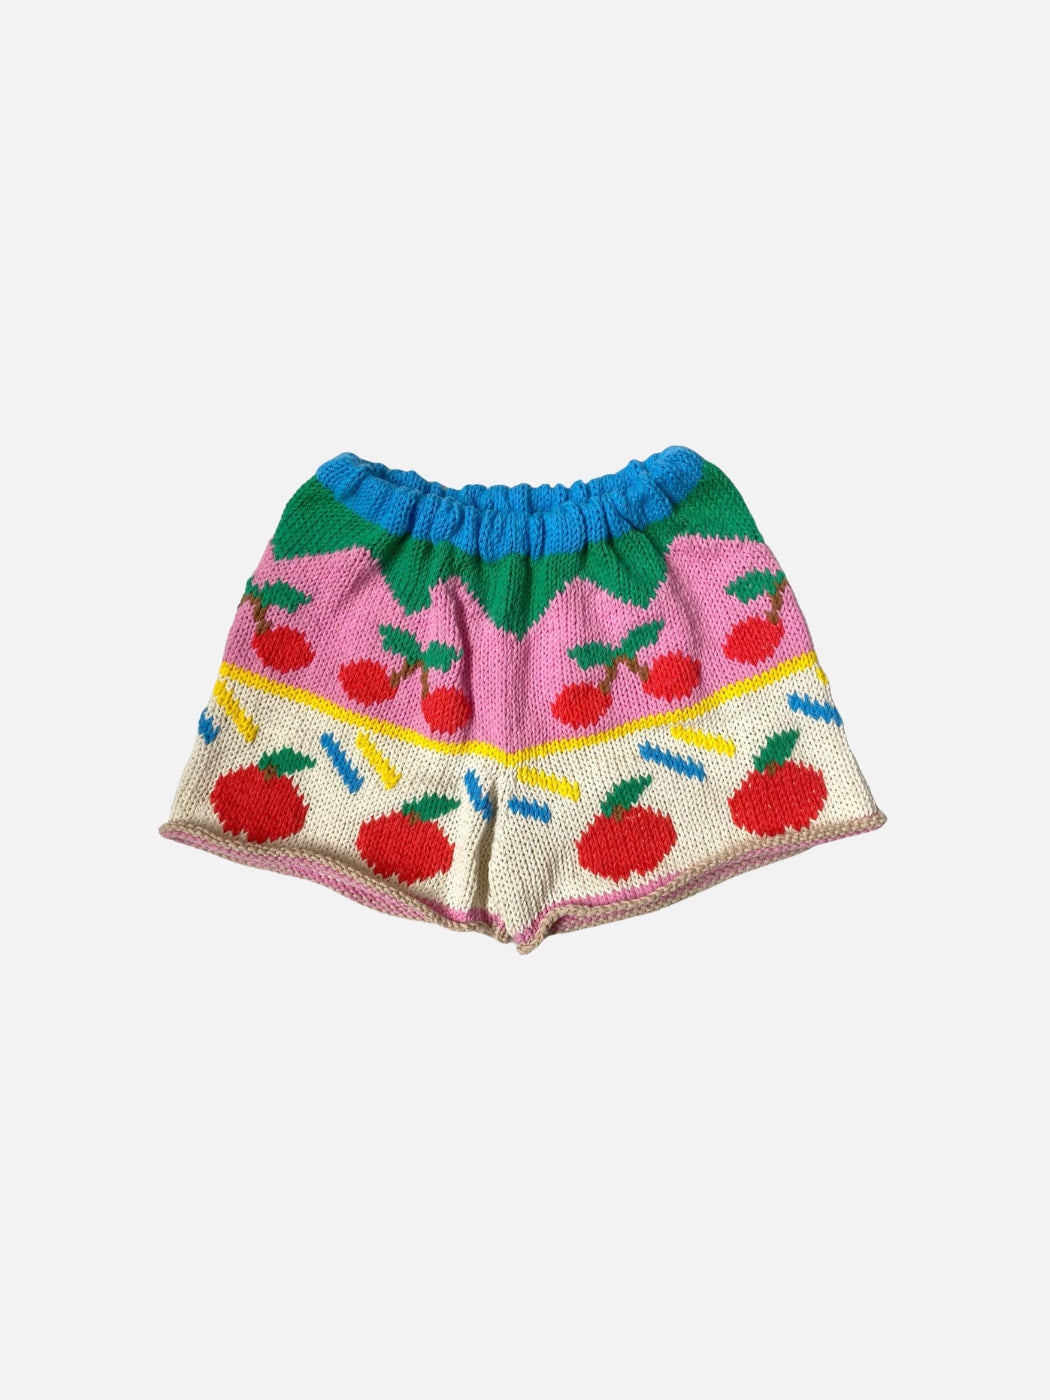 Tutti Frutti Shorts Preorder